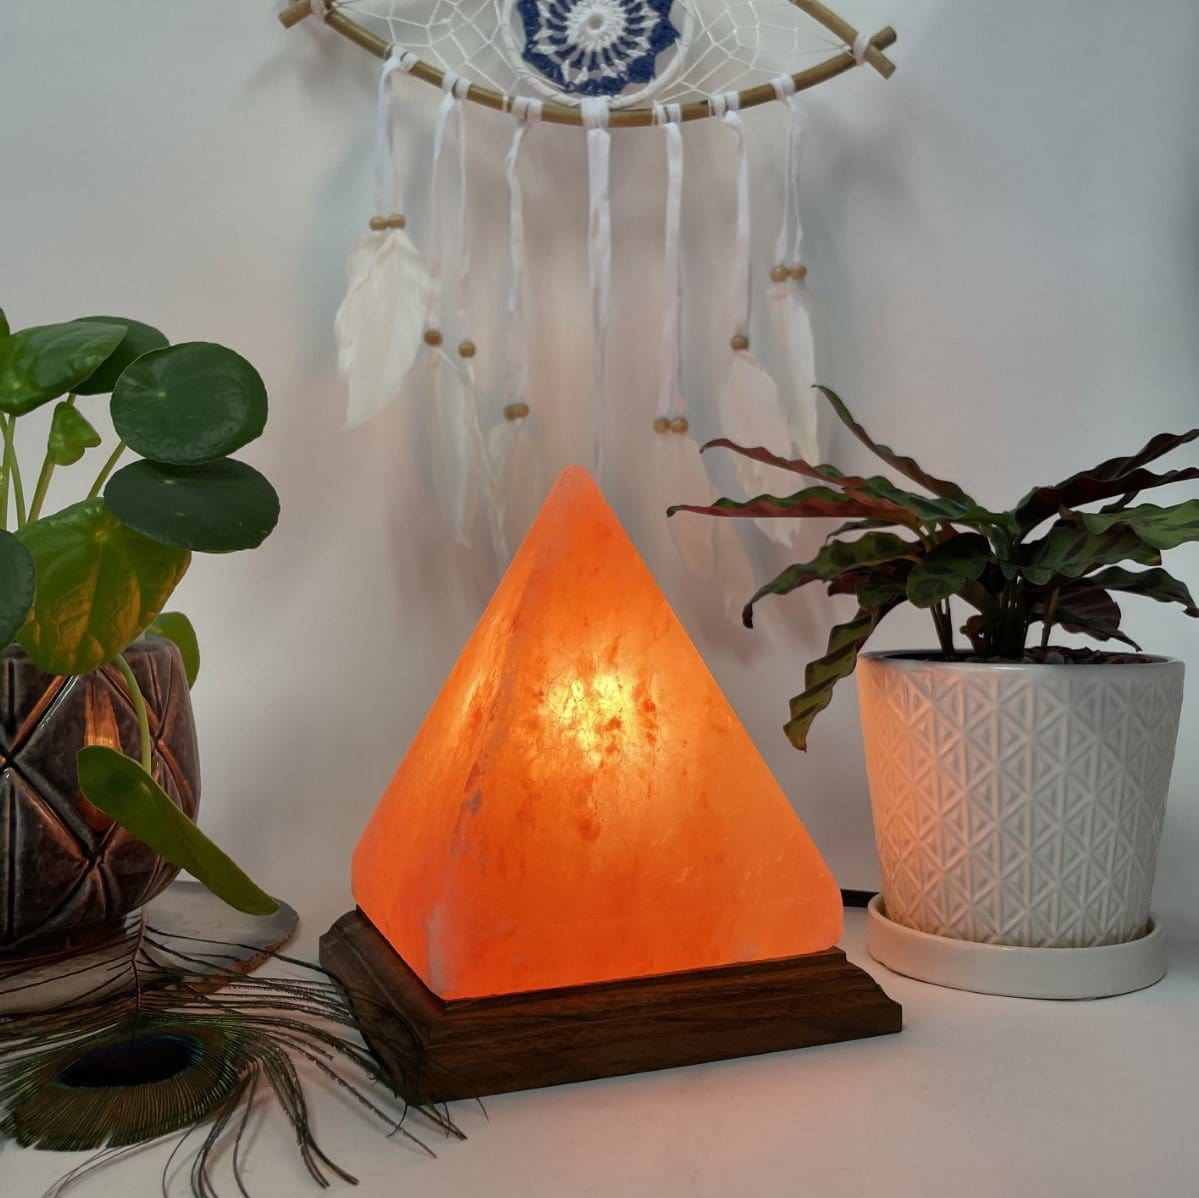 salt lamp pyramid lit up